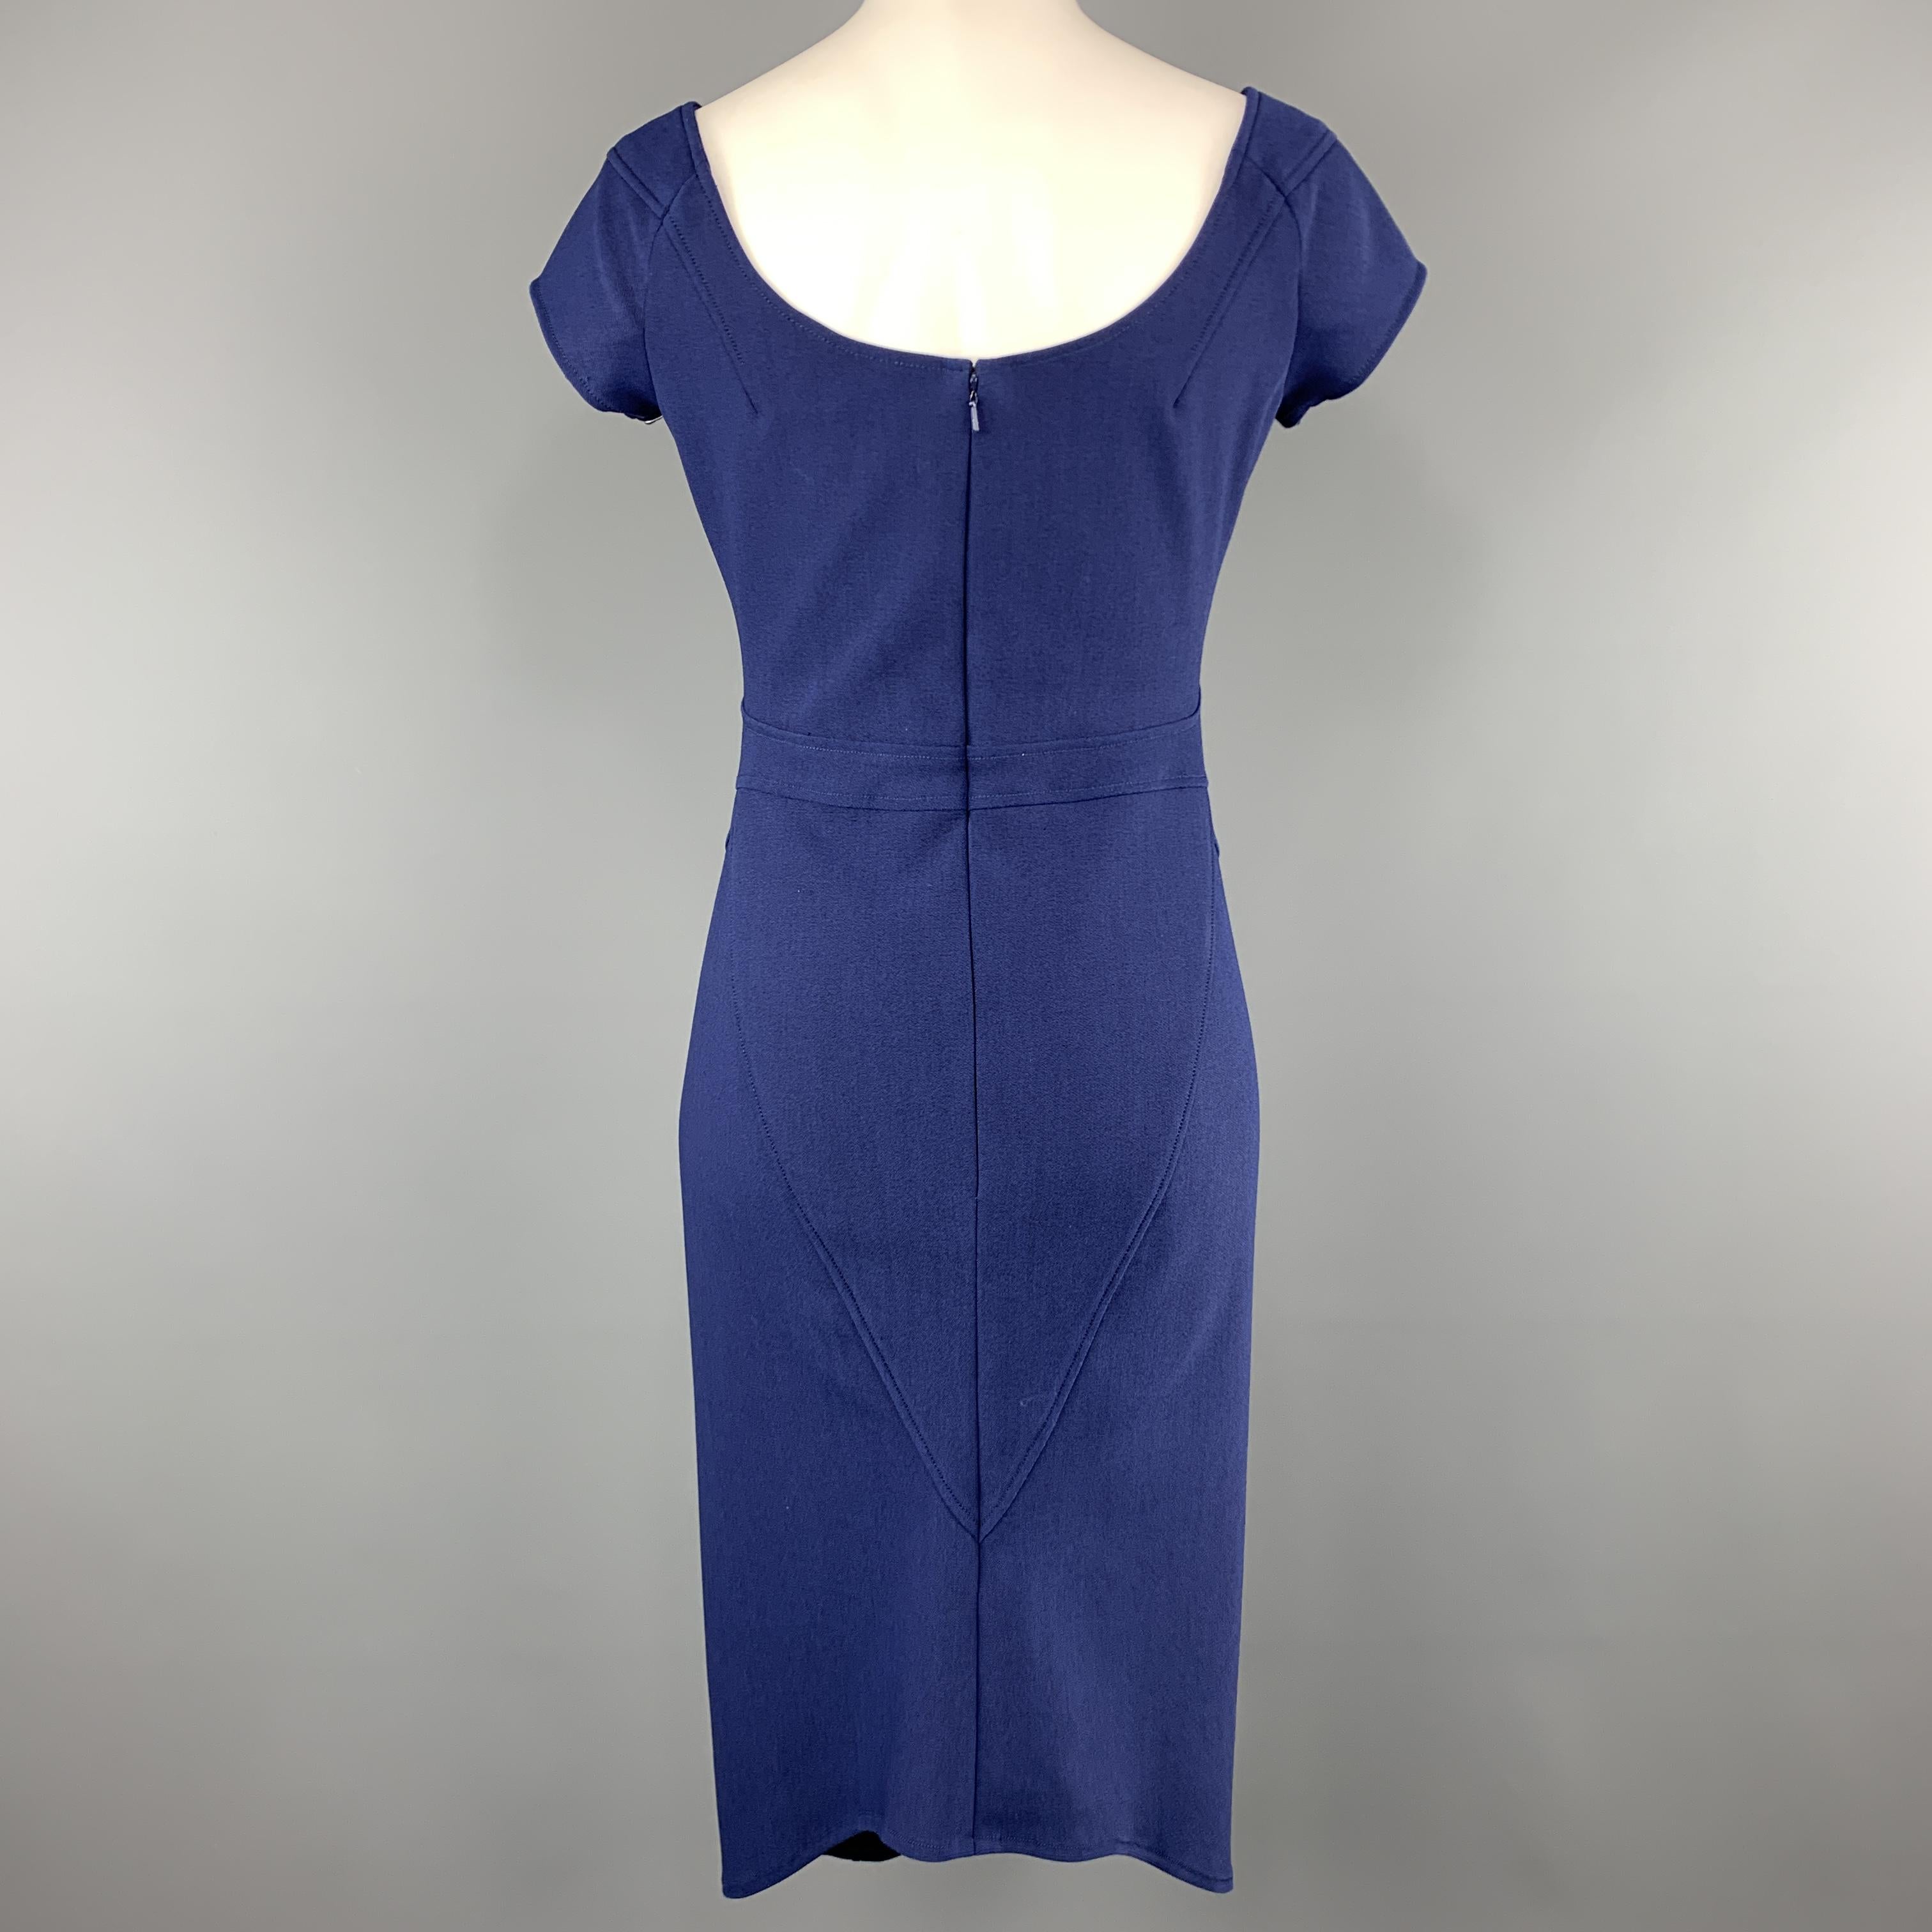 ZAC POSEN Size 6 Navy Blue Stretch Wool Cap Sleeve Sheath Dress 1